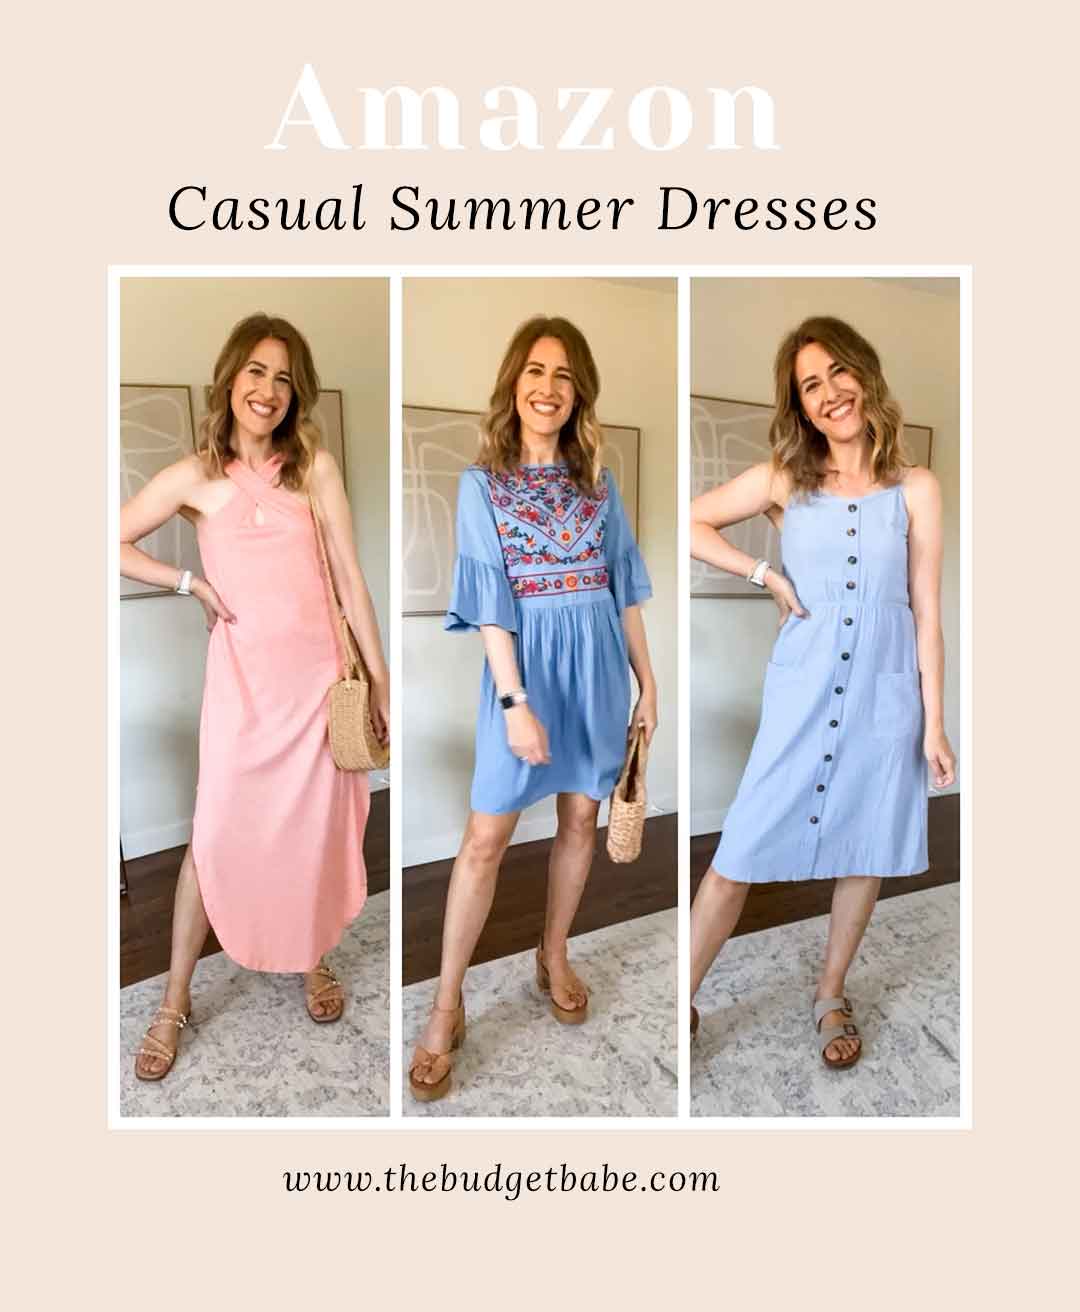 3 casual summer dresses on Amazon